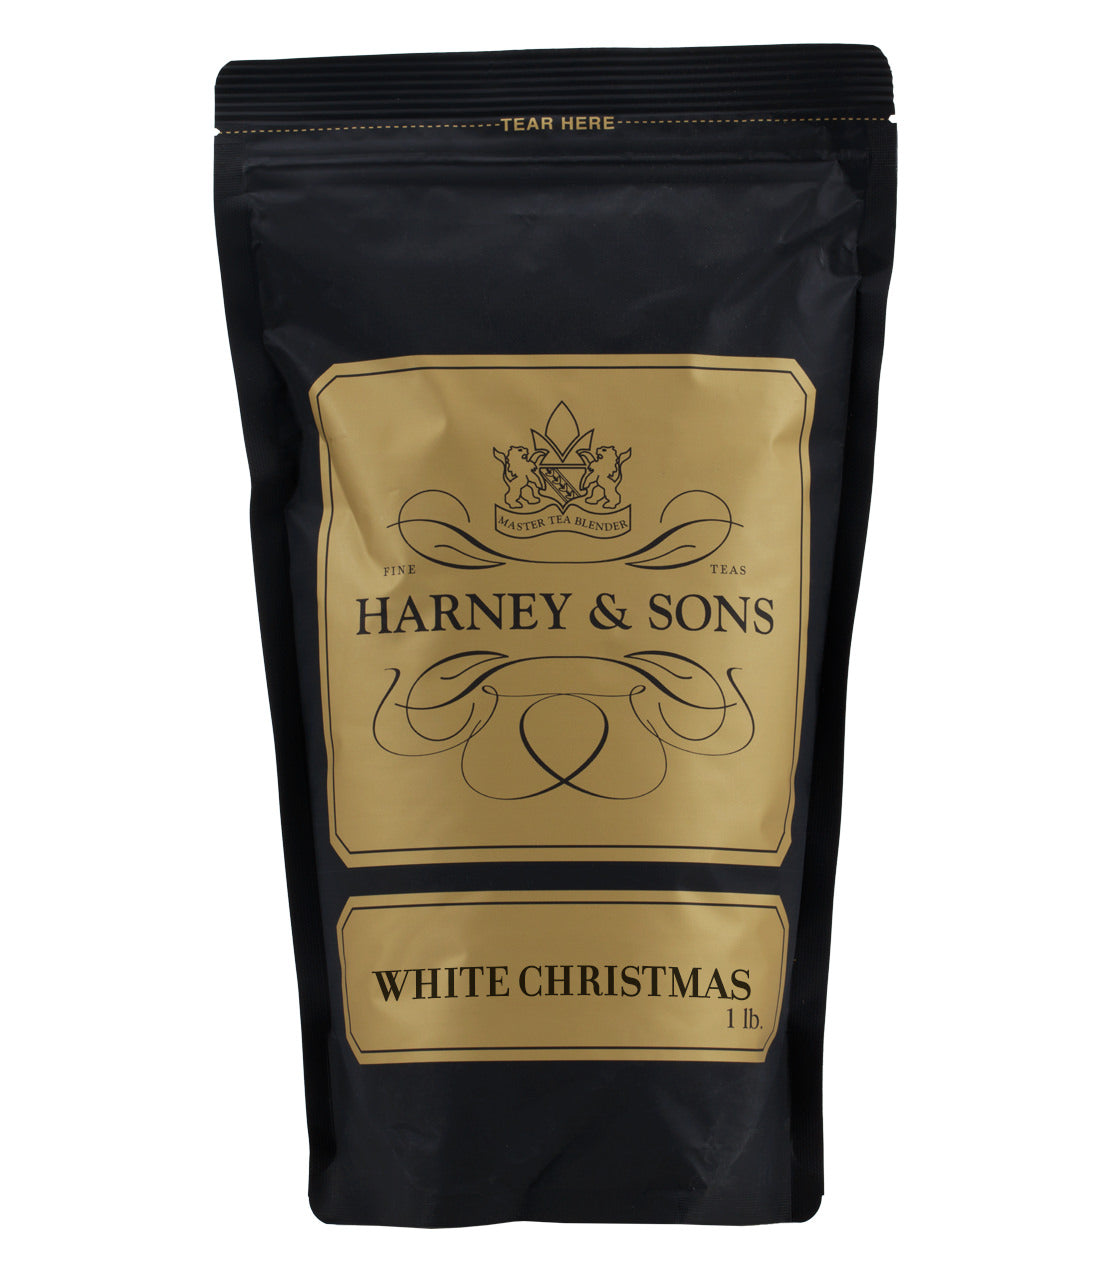 White Christmas - Loose 1 lb. Bag - Harney & Sons Fine Teas